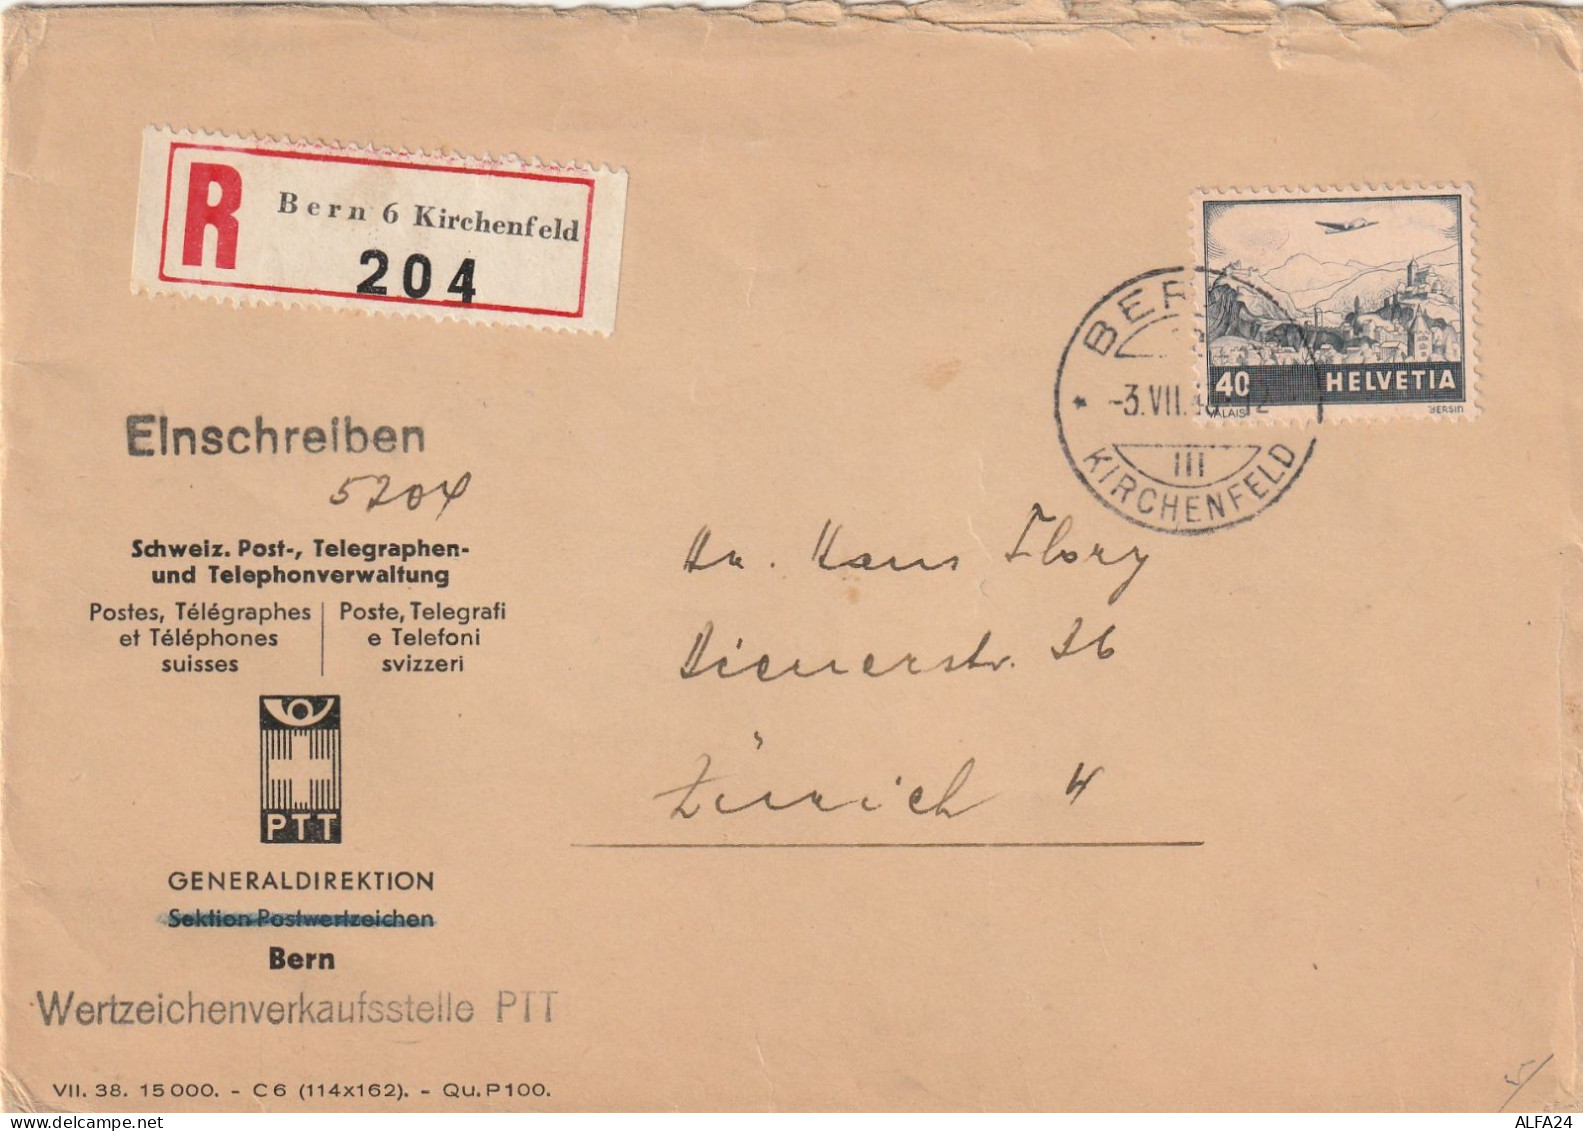 RACCOMANDATA SVIZZERA 1943 40 TIMBRO BERN KIRCHENFELD (YK24 - Storia Postale